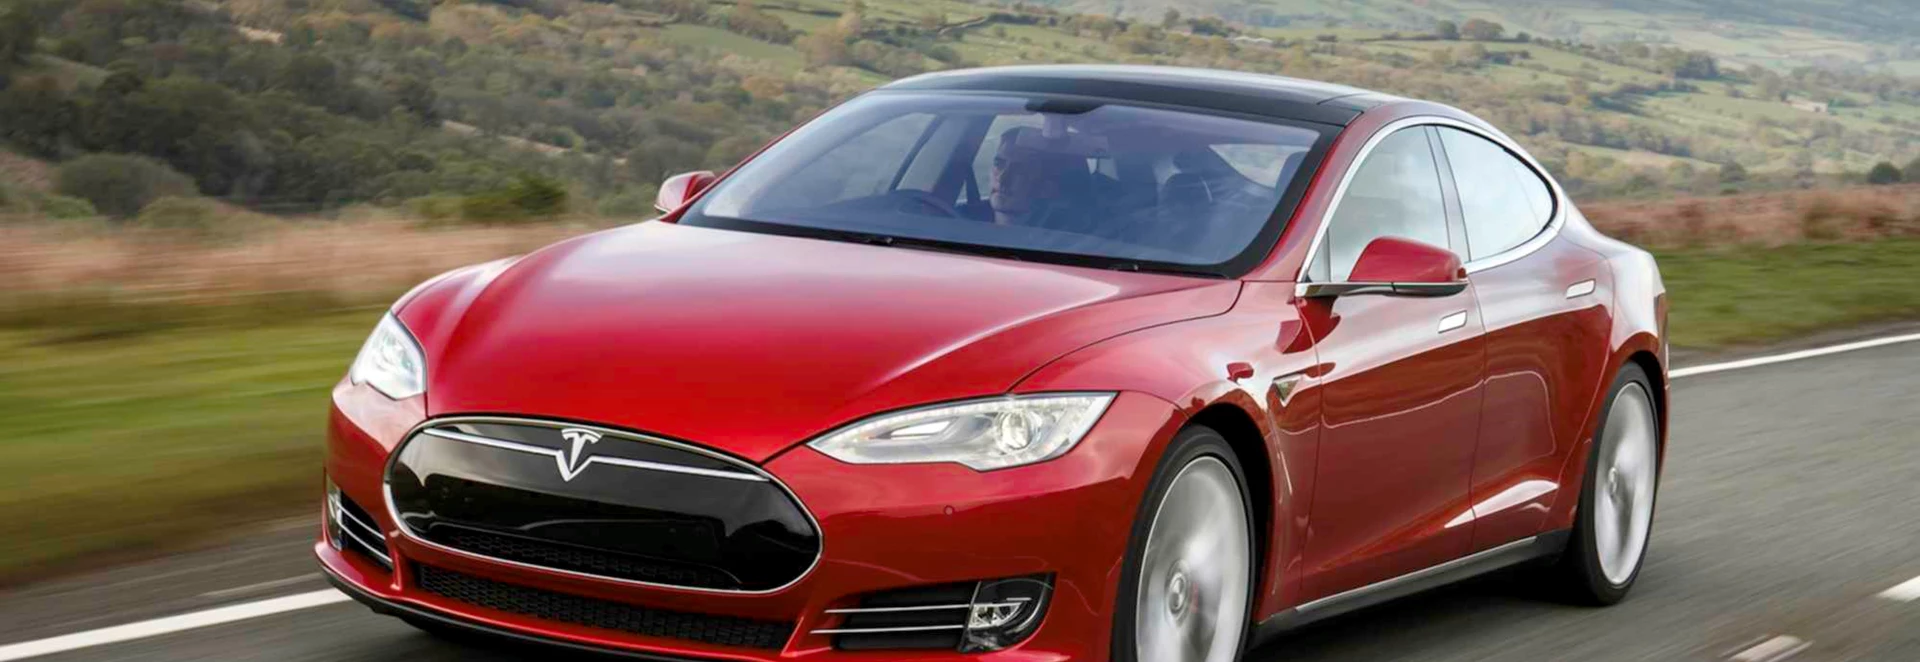 Tesla Model S saloon review 